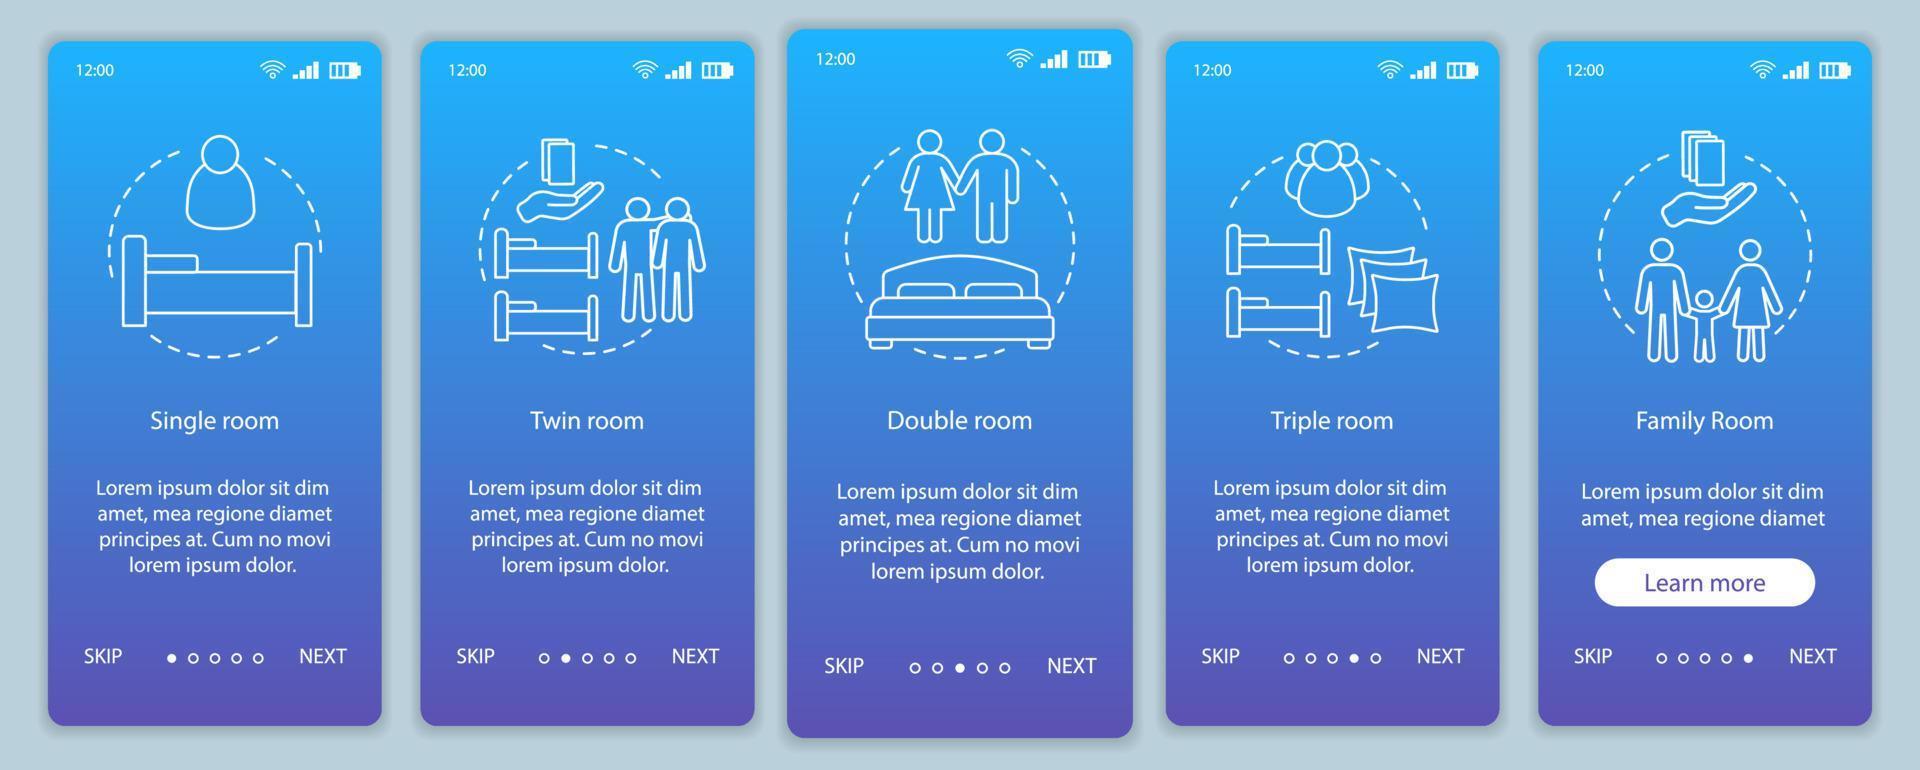 Hotel booking onboarding mobile app page screen vector template. Choosing accommodation. Single, twin, double room types walkthrough website steps. Hostel, motel. UX, UI, GUI smartphone interface